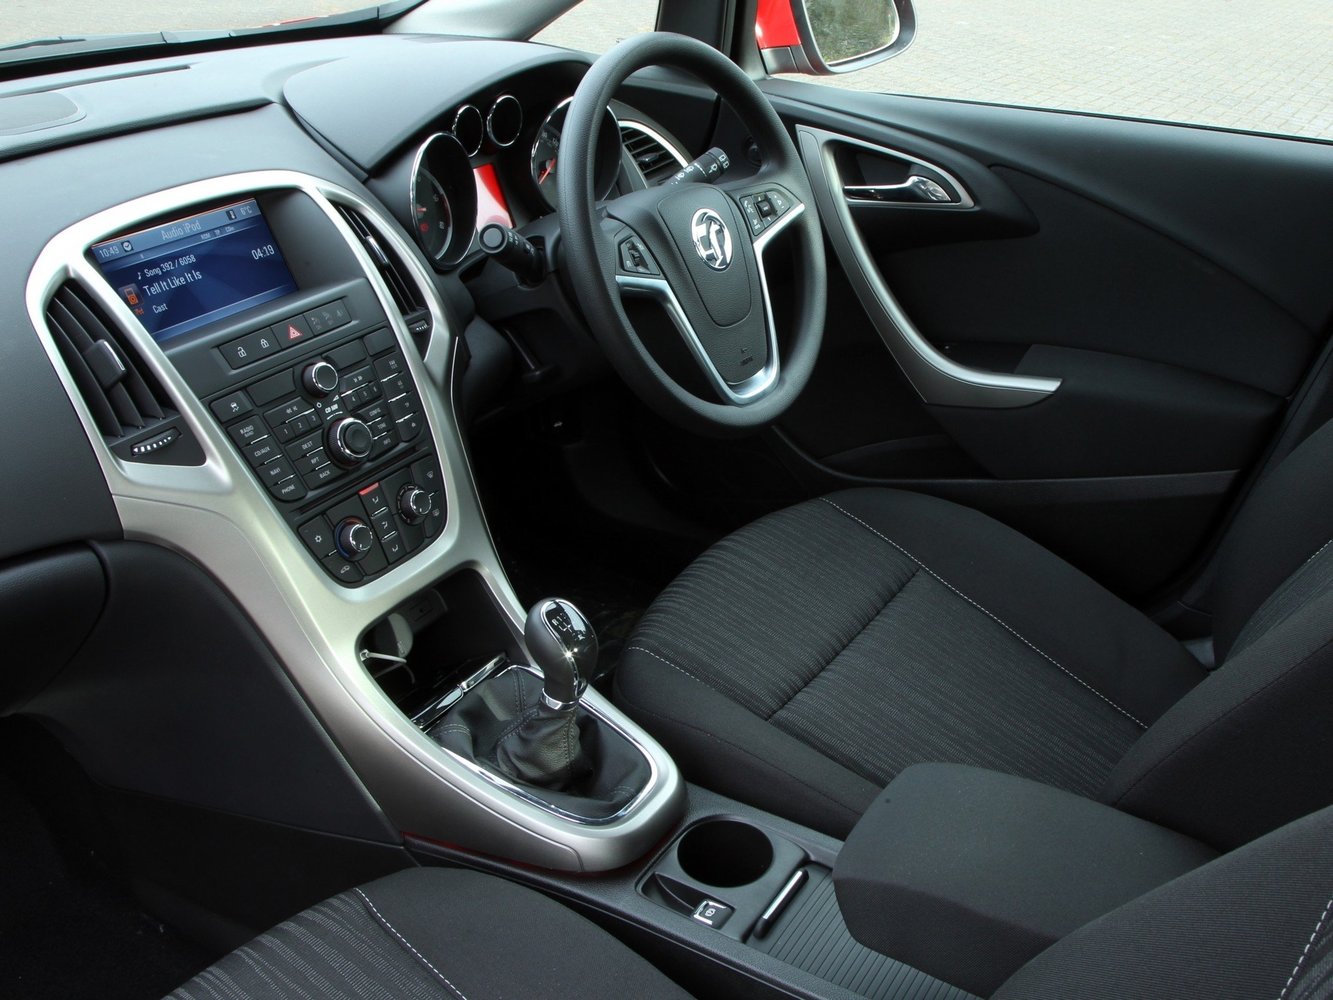 хэтчбек 5 дв. Vauxhall Astra 2009 - 2016г выпуска модификация 1.4 AT (140 л.с.)